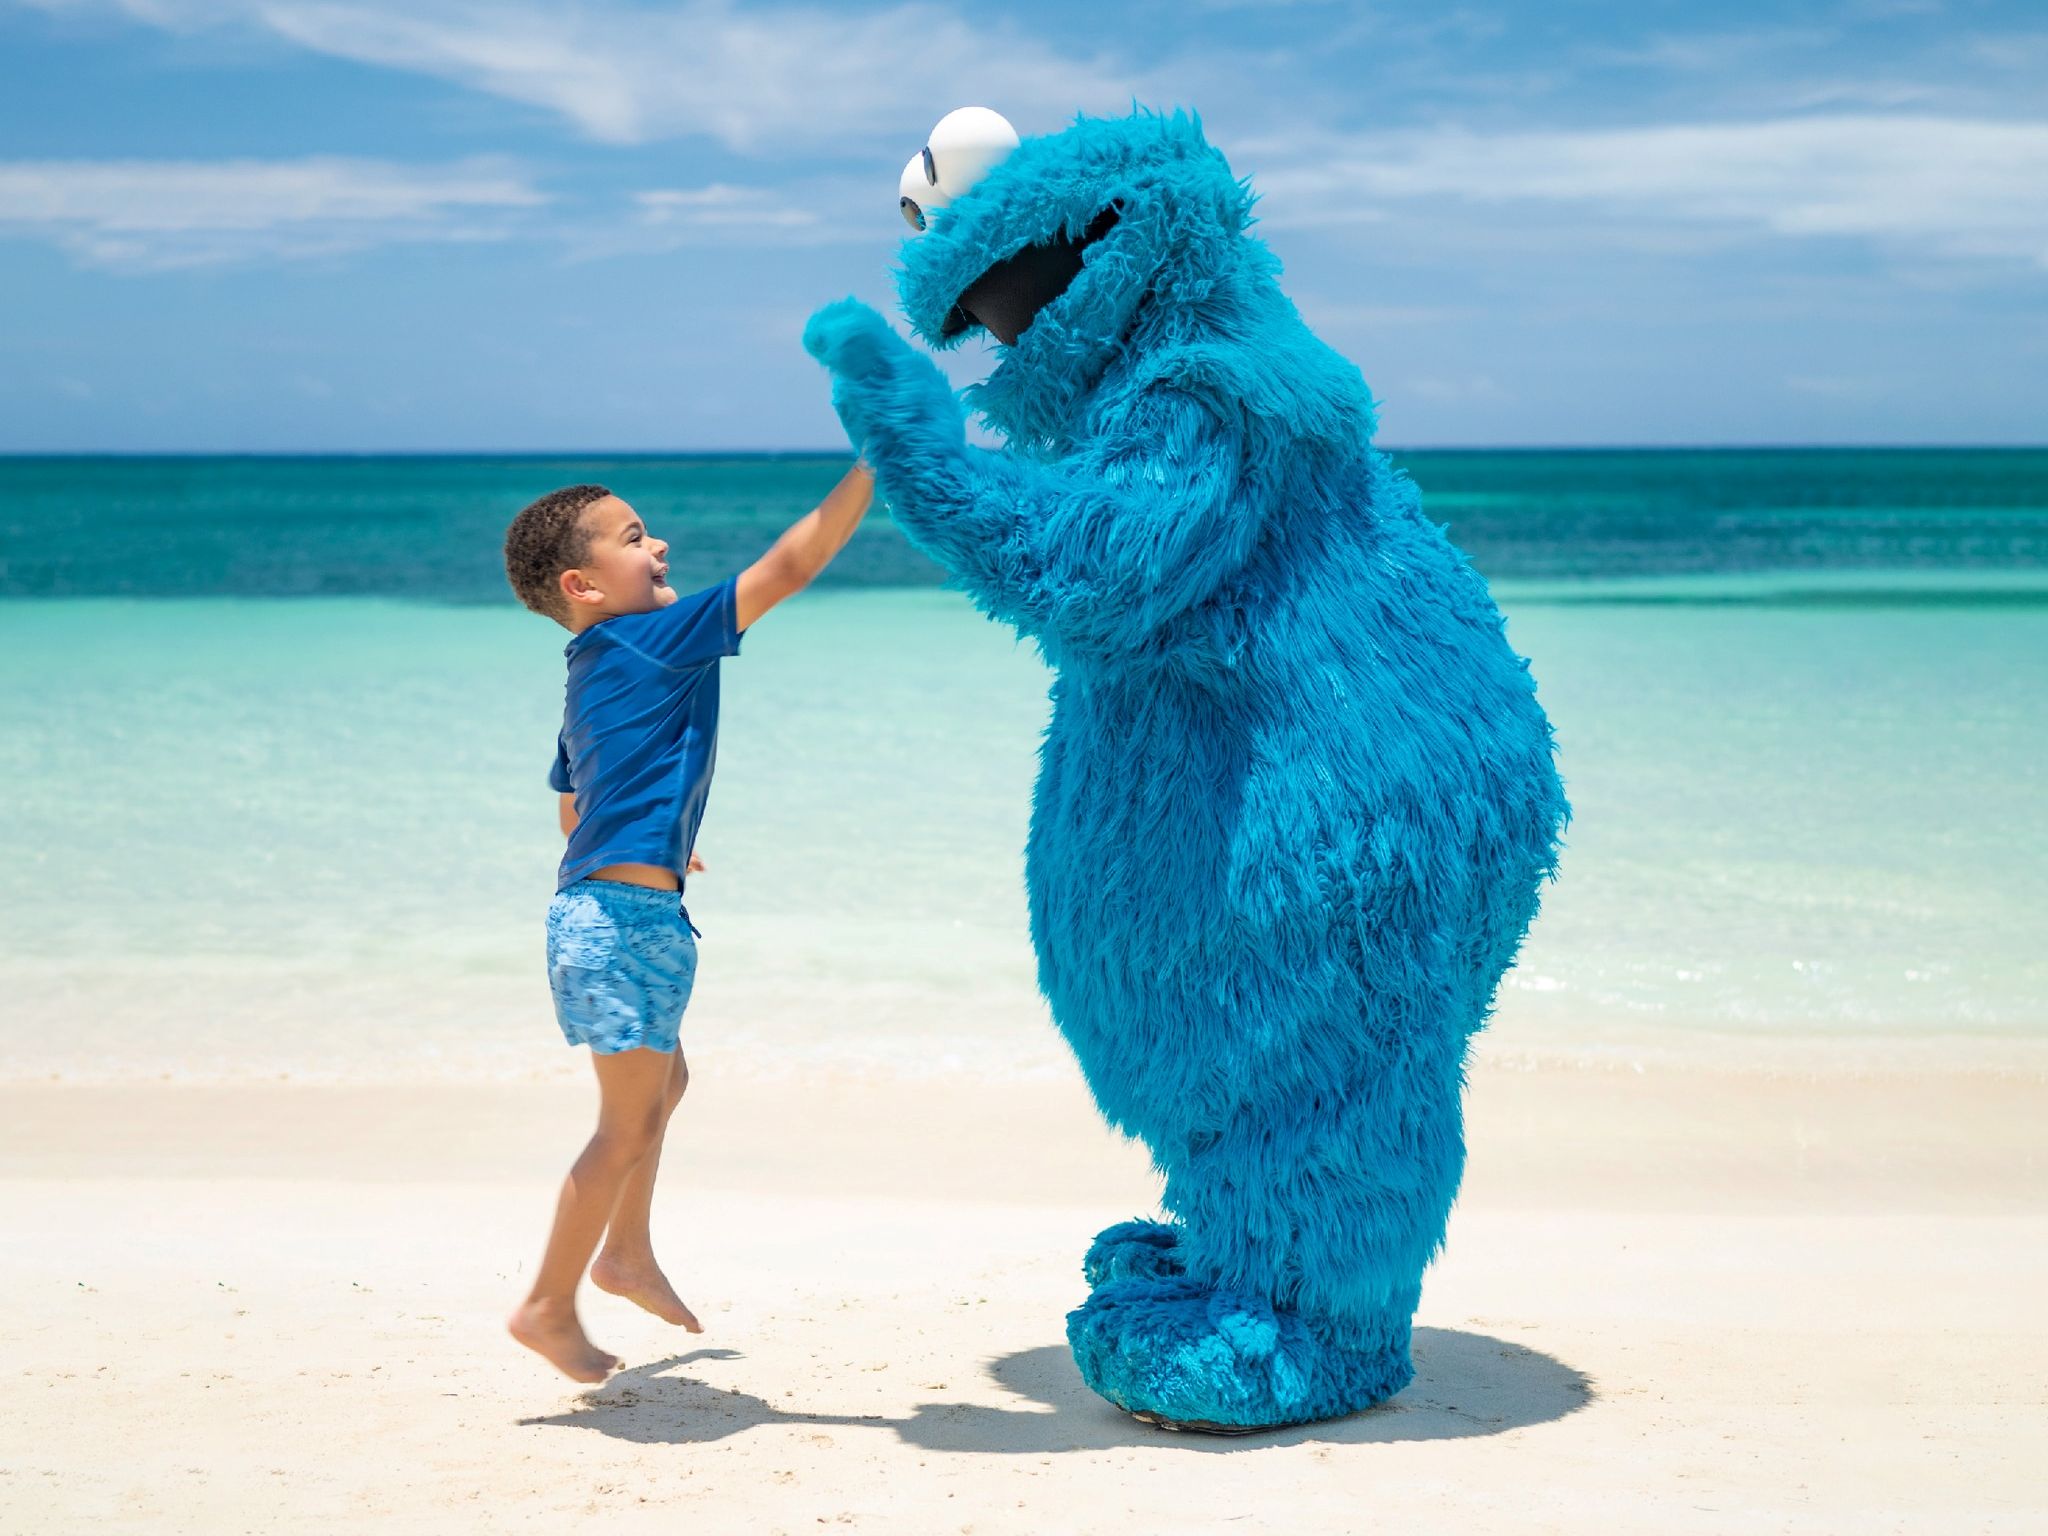 Cookie Monster making friends